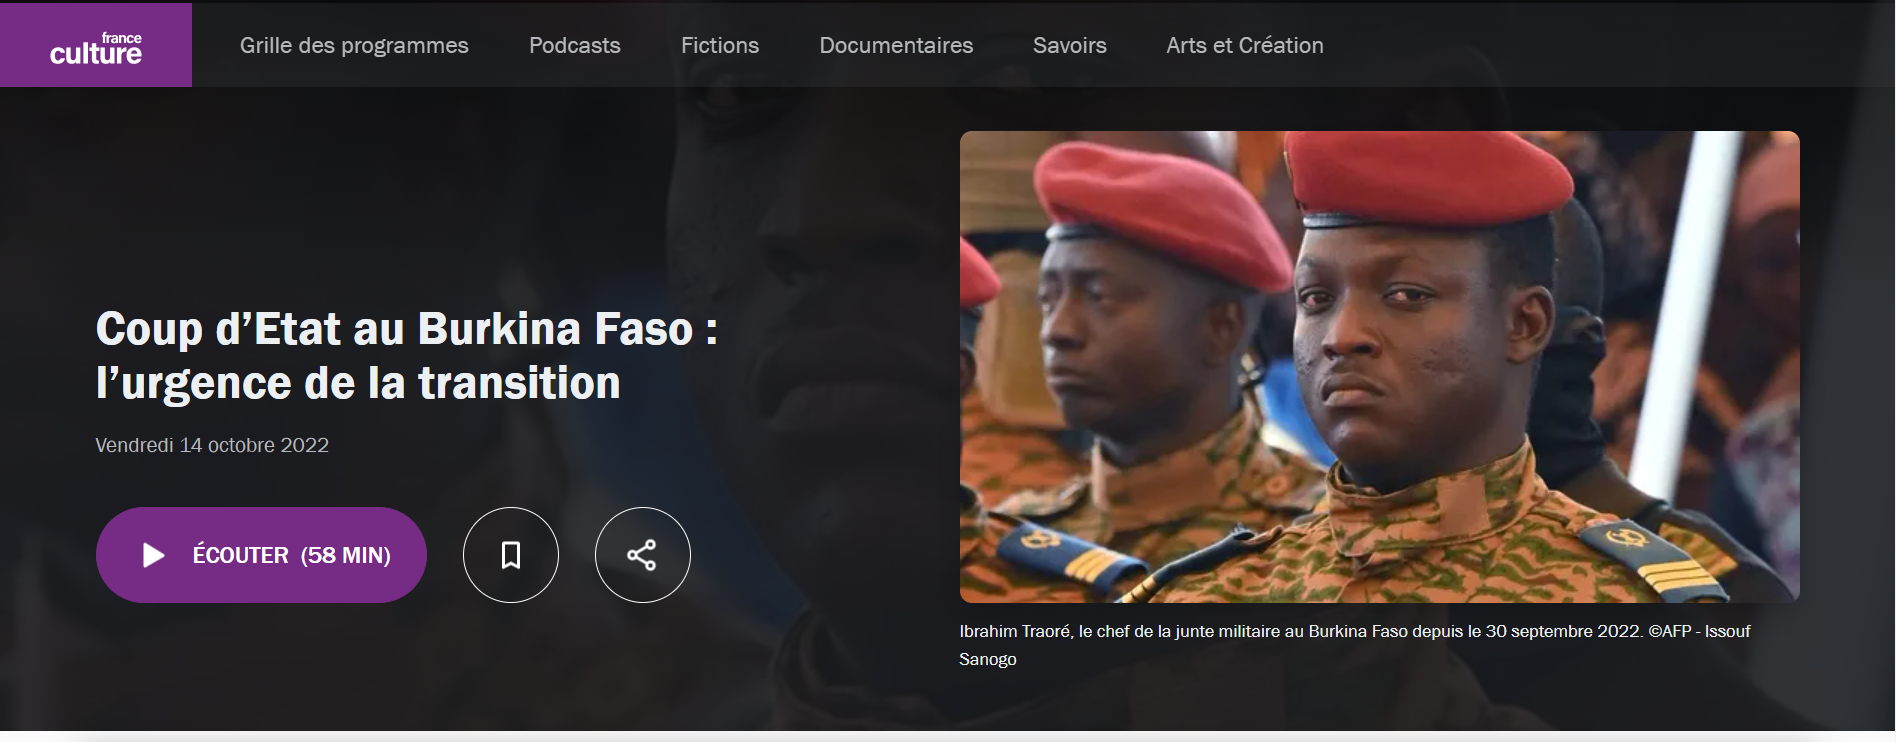 Miniature Coup d’Etat au Burkina Faso : l’urgence de la transition